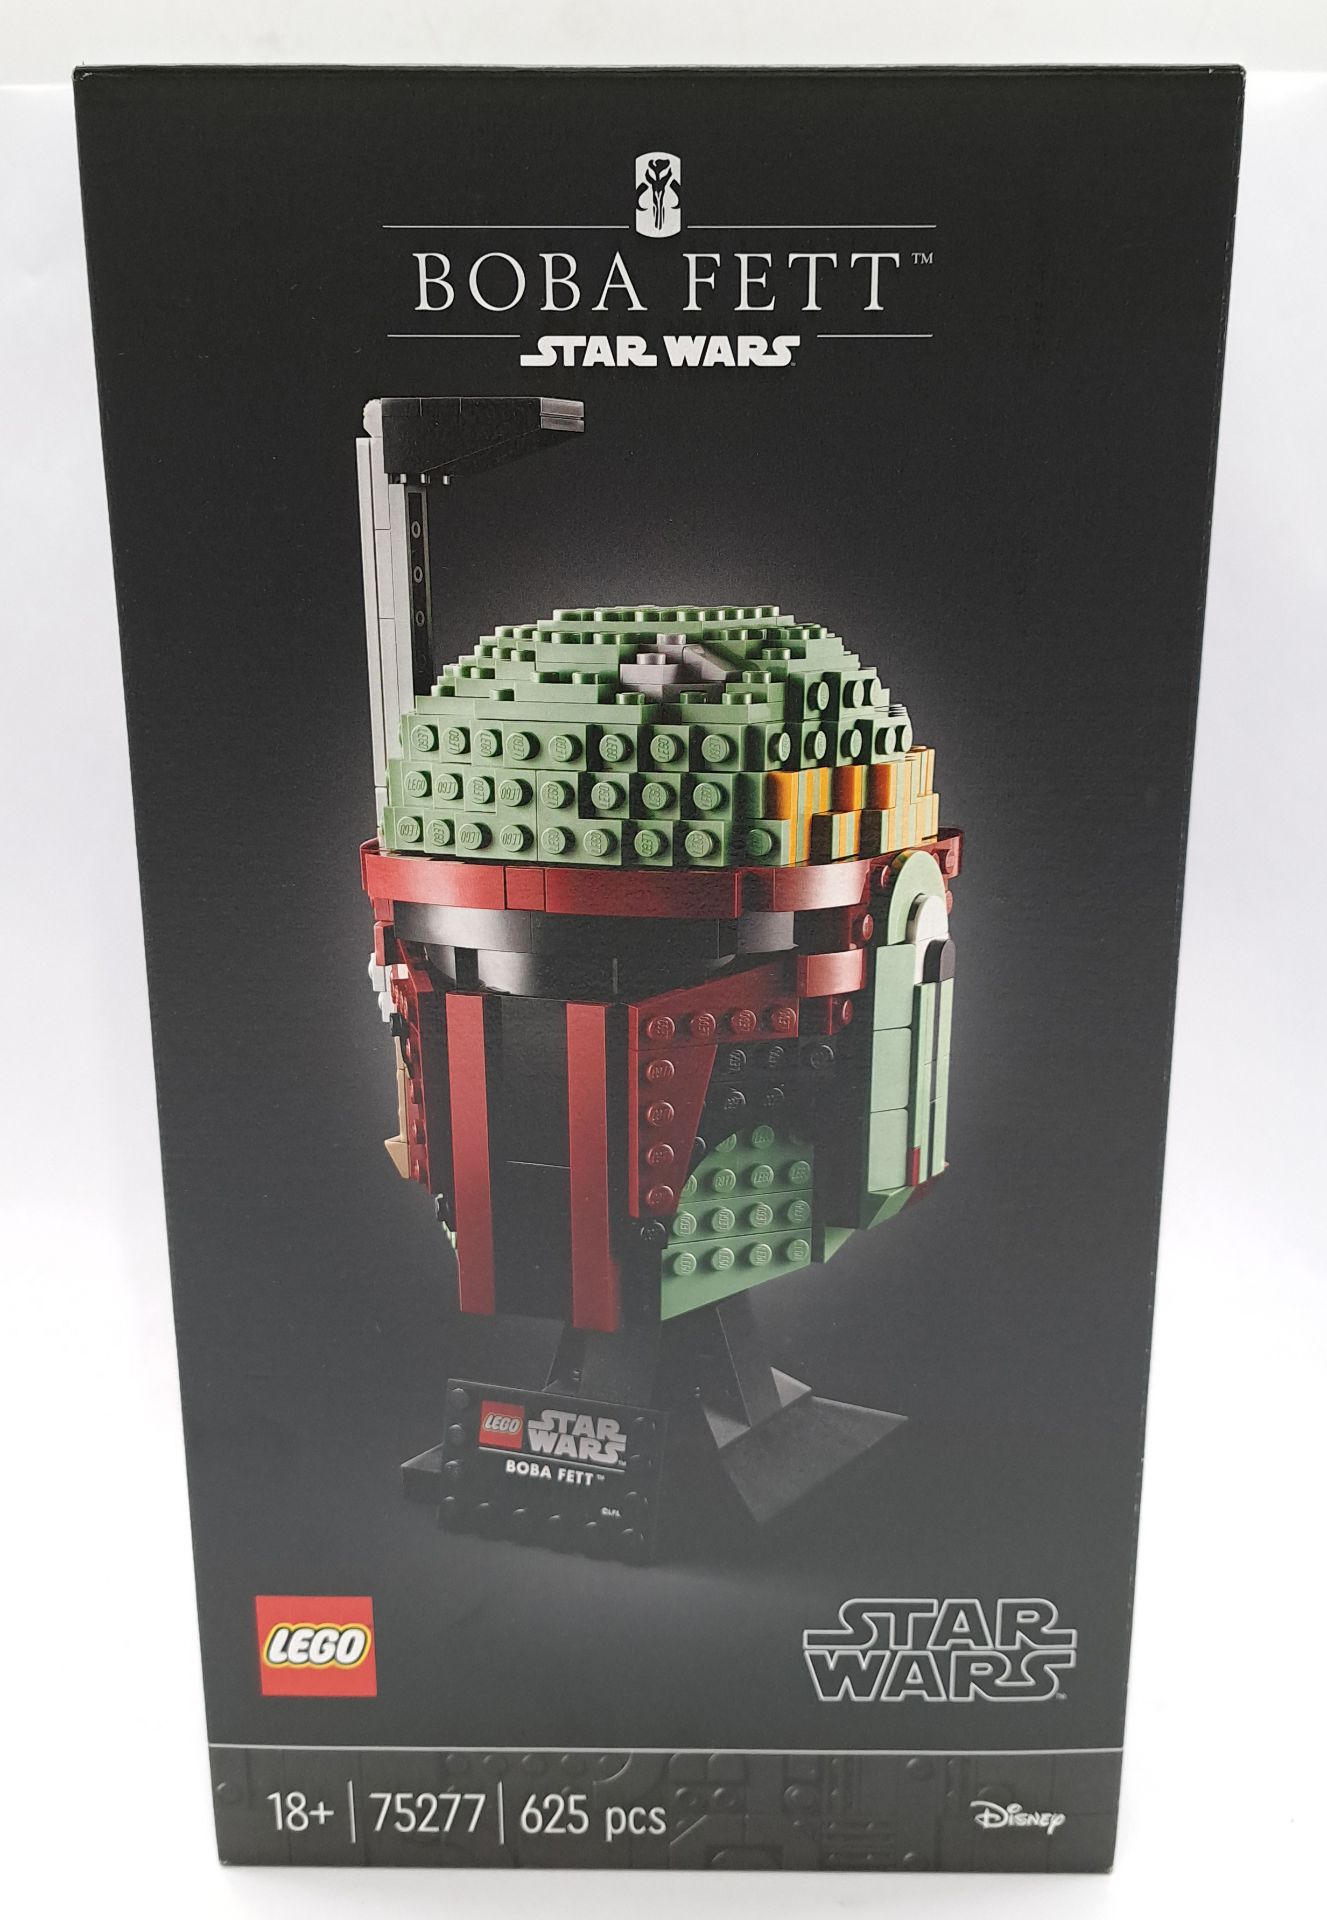 Lego Star Wars Boba Fett Helmet set 75277